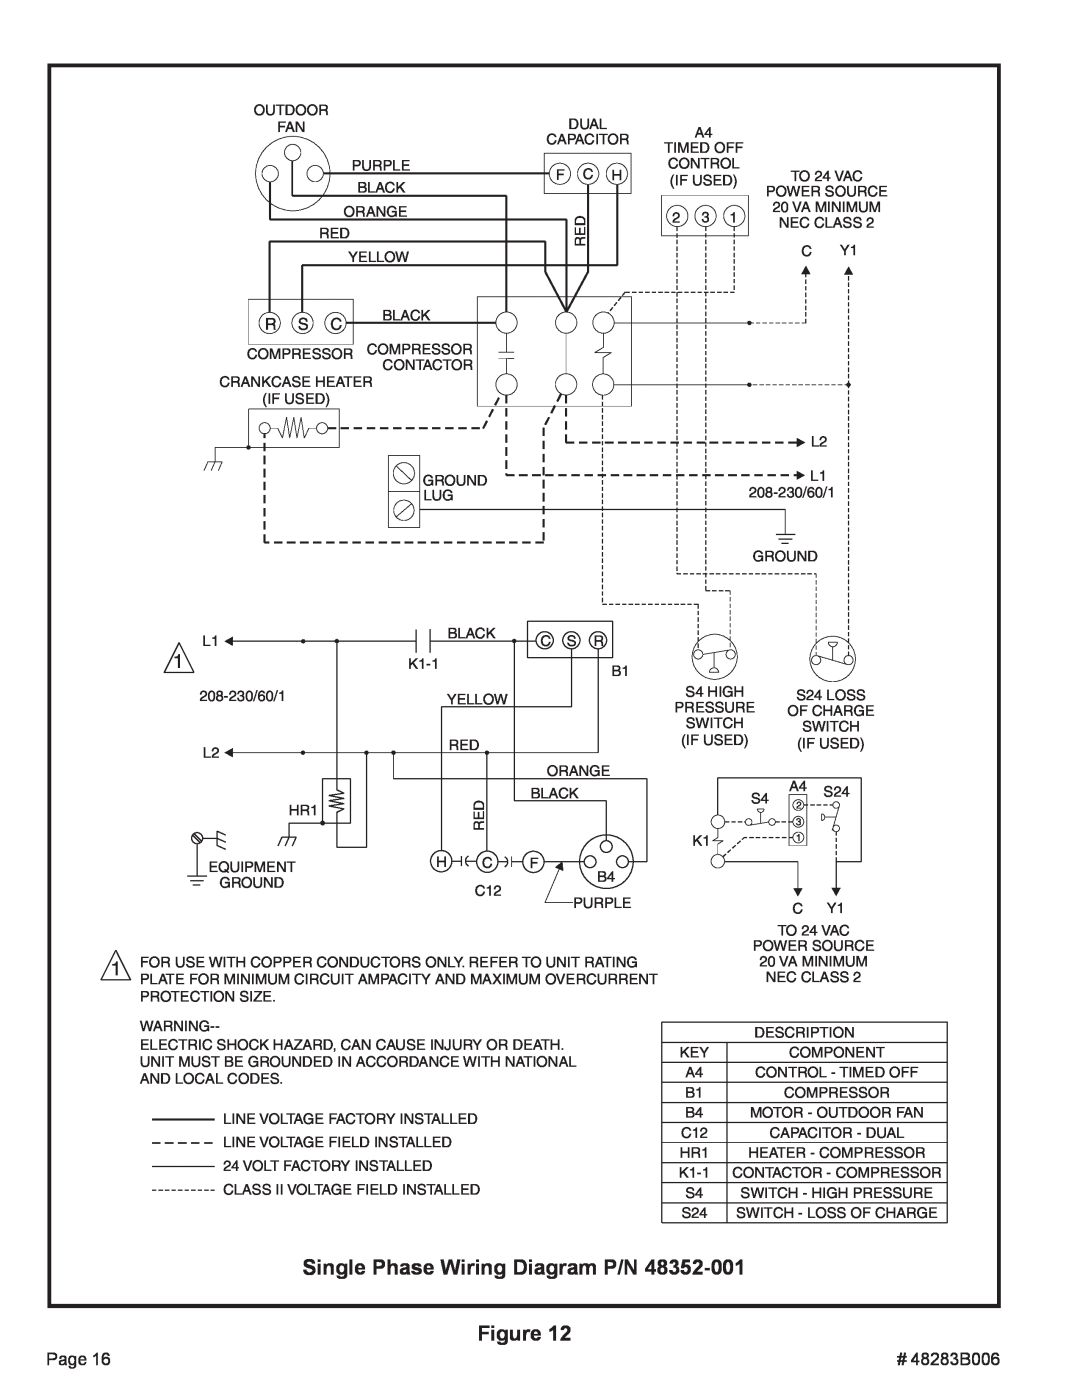 Lennox International Inc 2SCU13 warranty Single Phase Wiring Diagram P/N Figure 